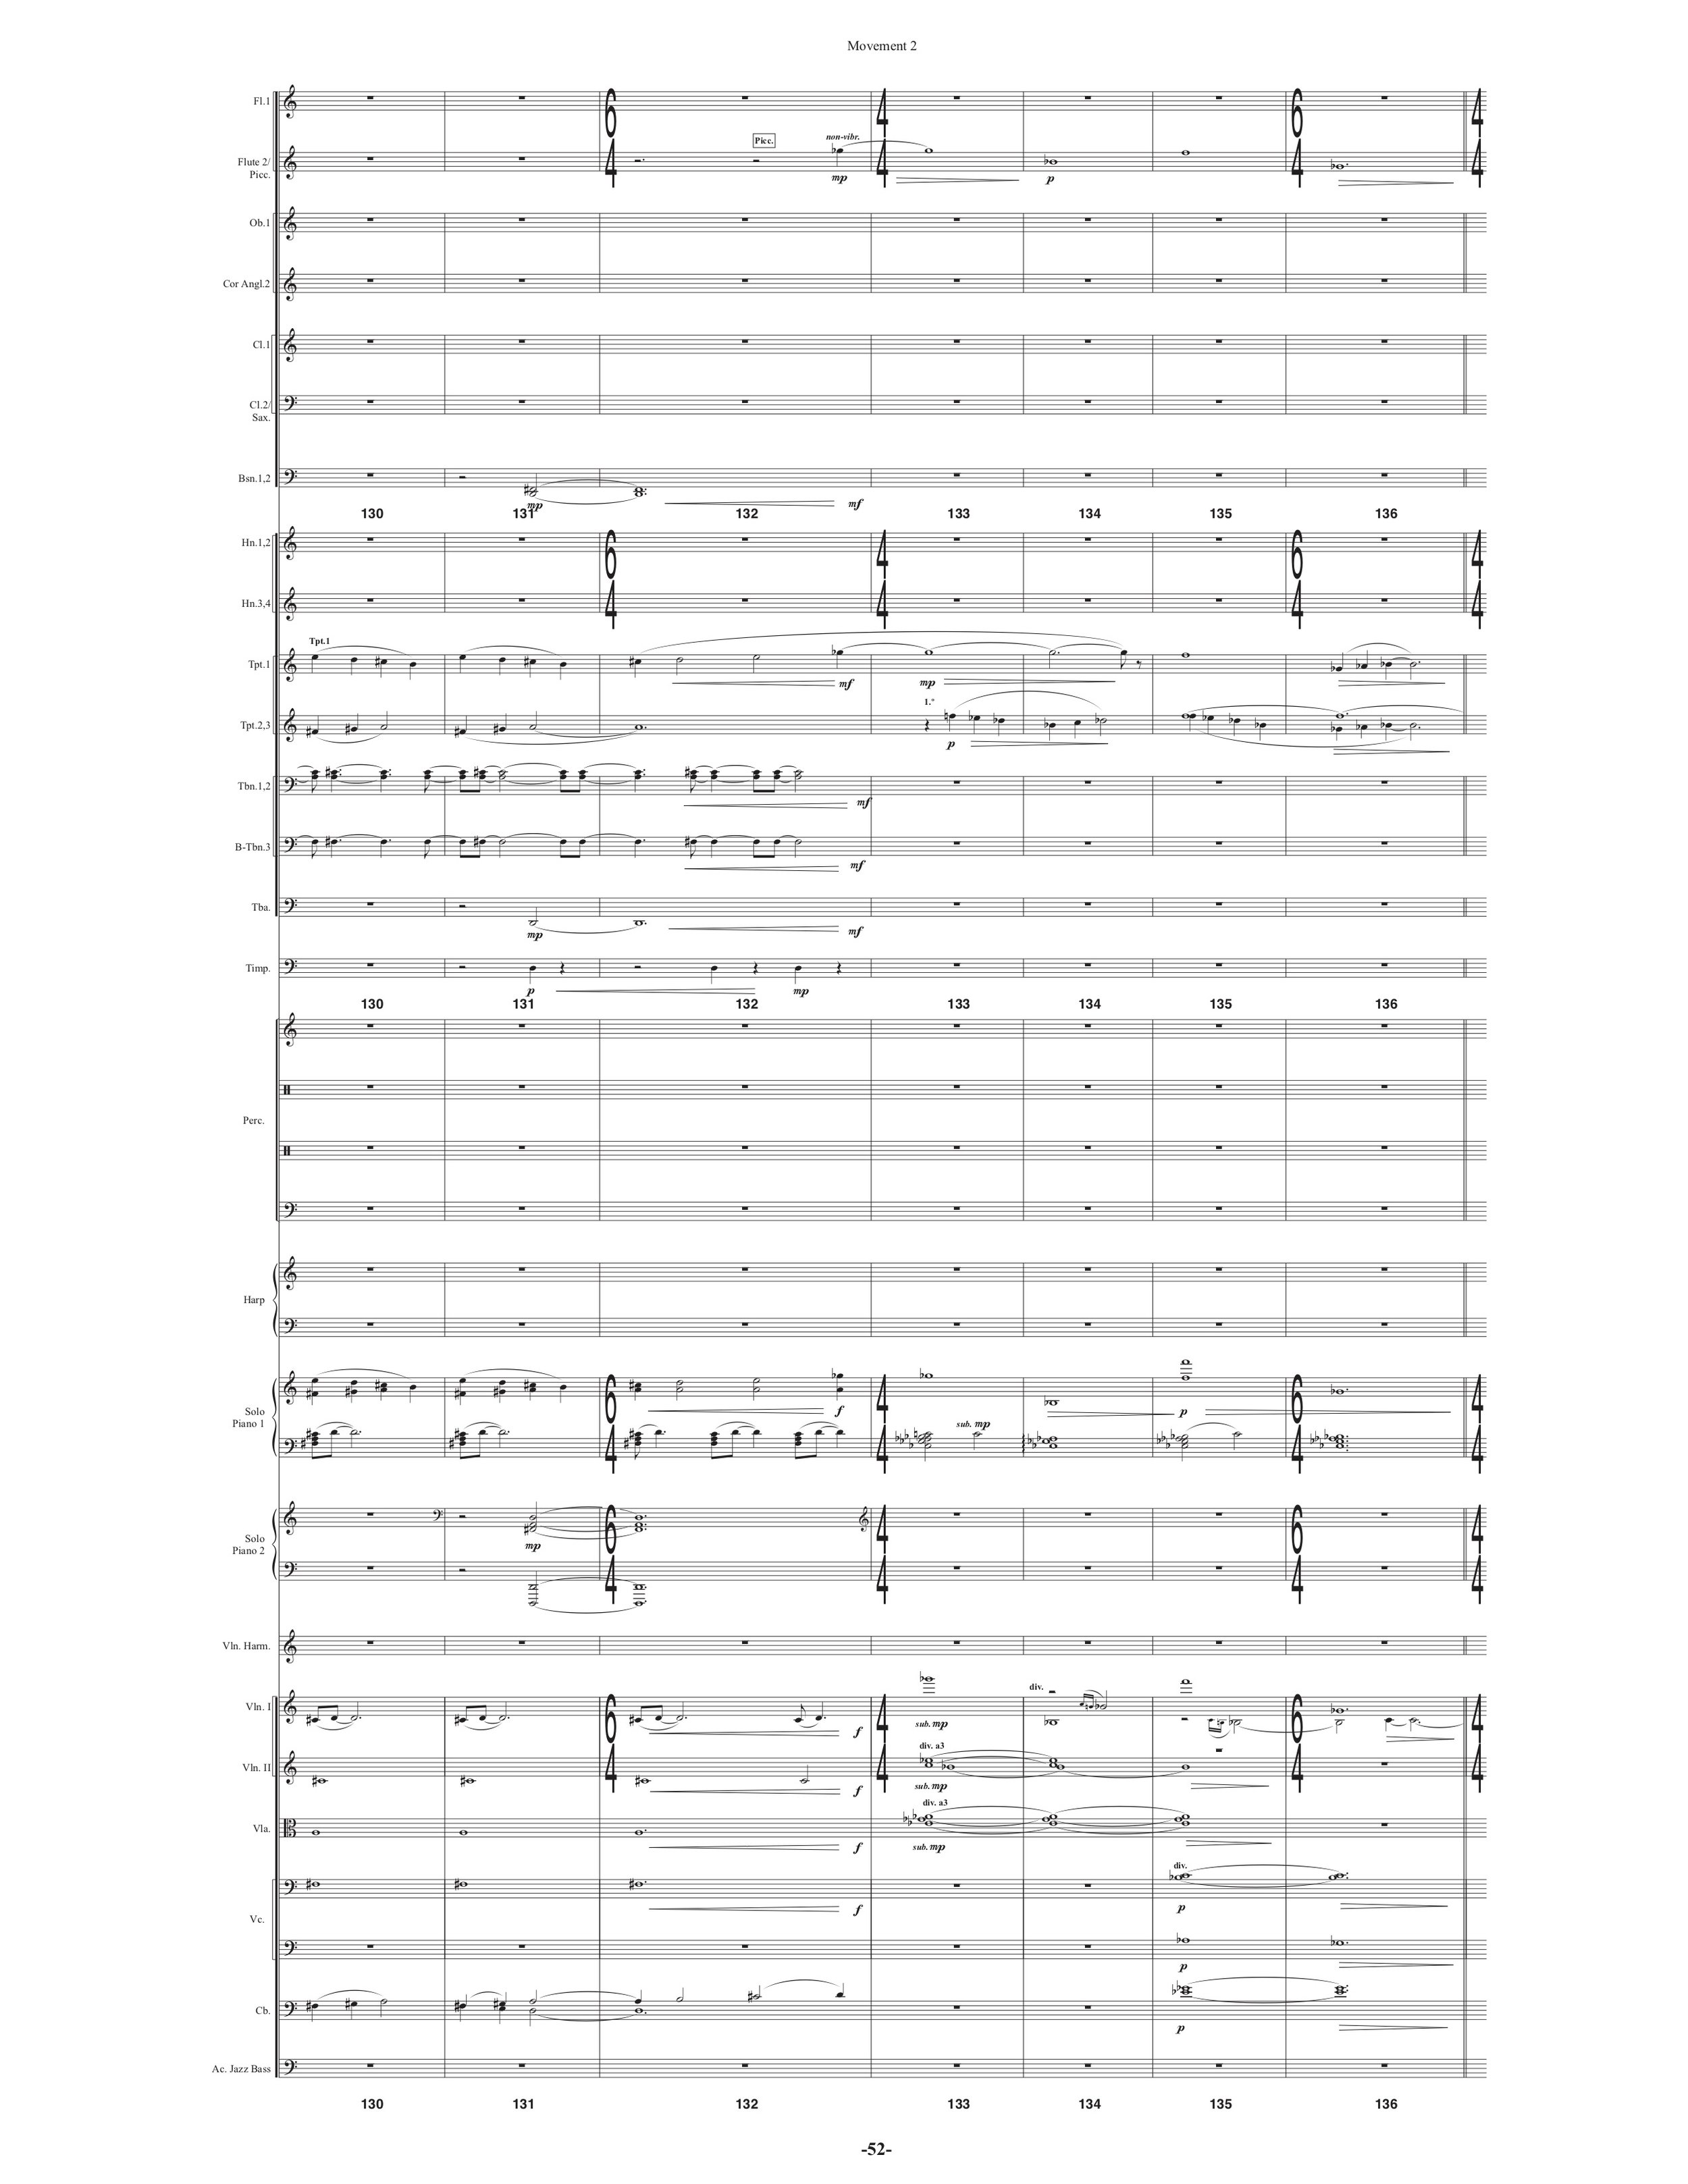 Symphony_Orch & 2 Pianos p57.jpg